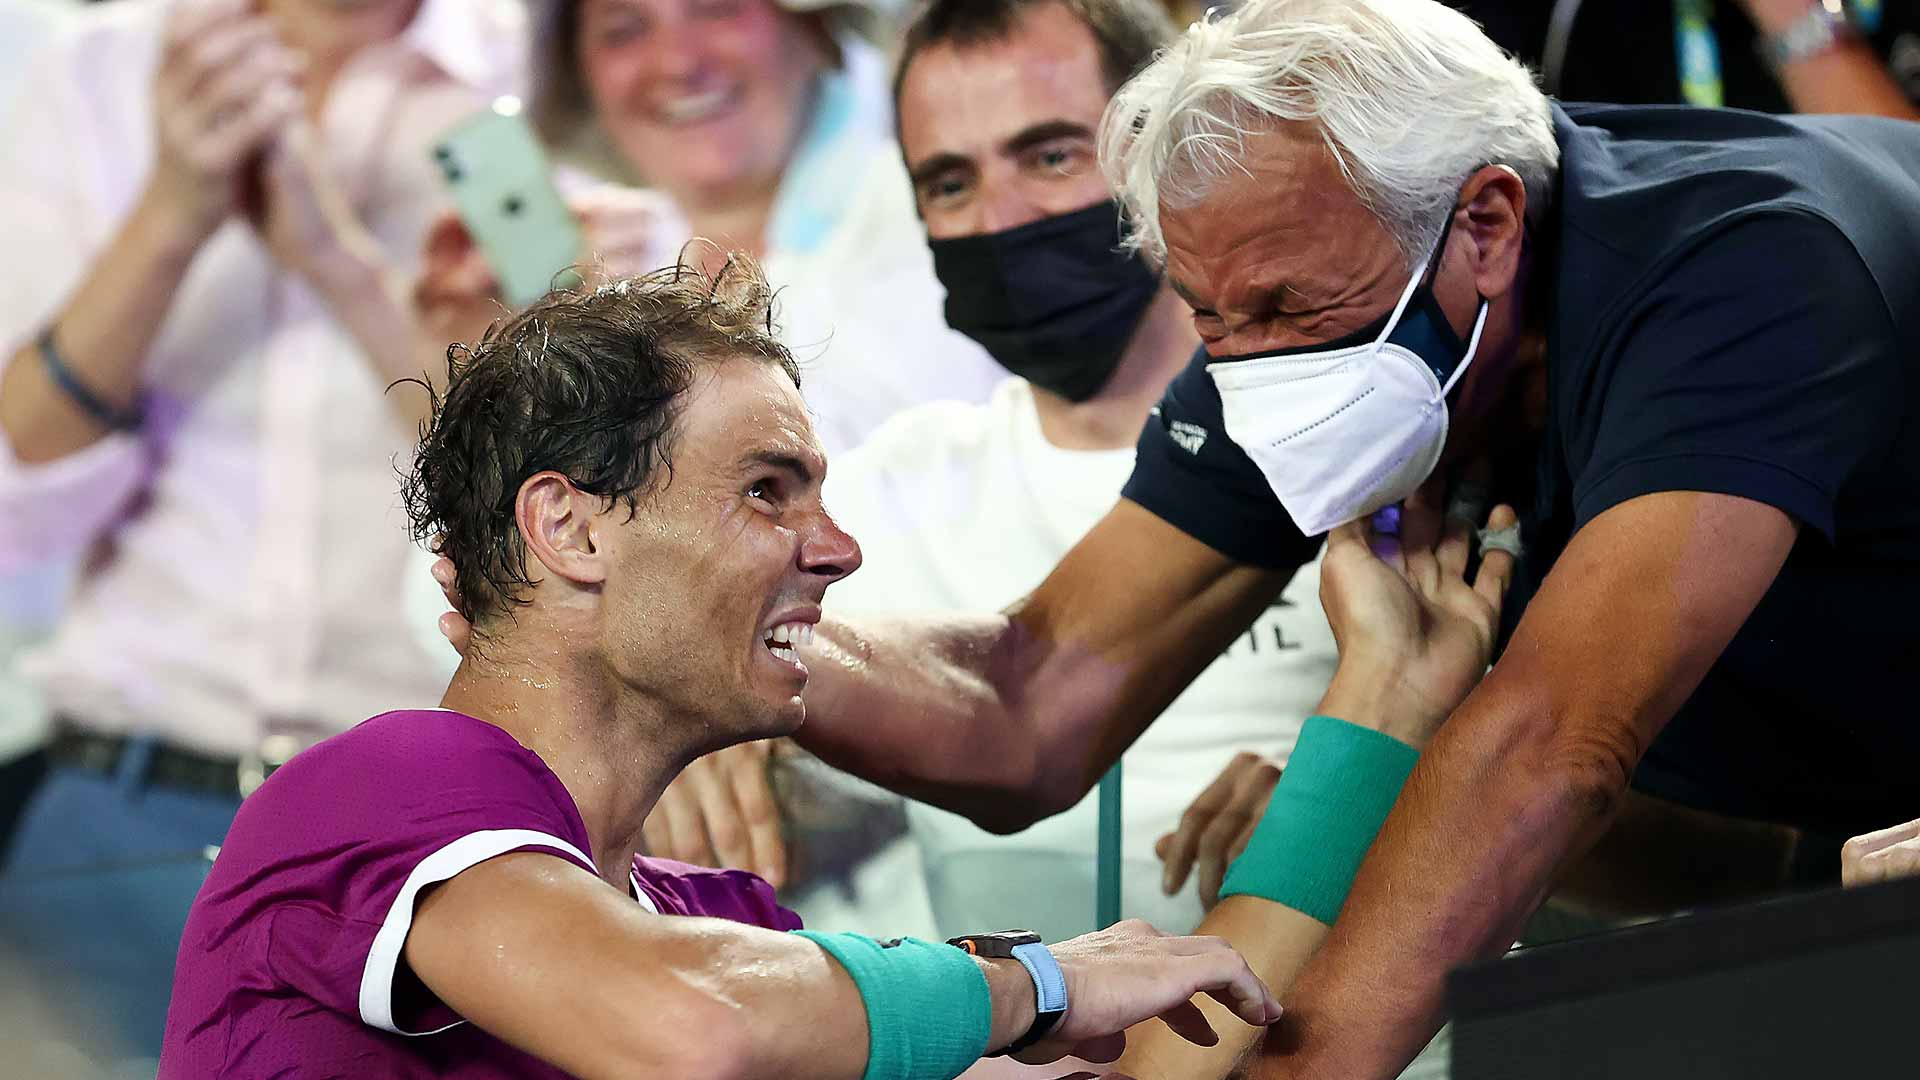 <a href='https://www.atptour.com/en/players/rafael-nadal/n409/overview'>Rafael Nadal</a>